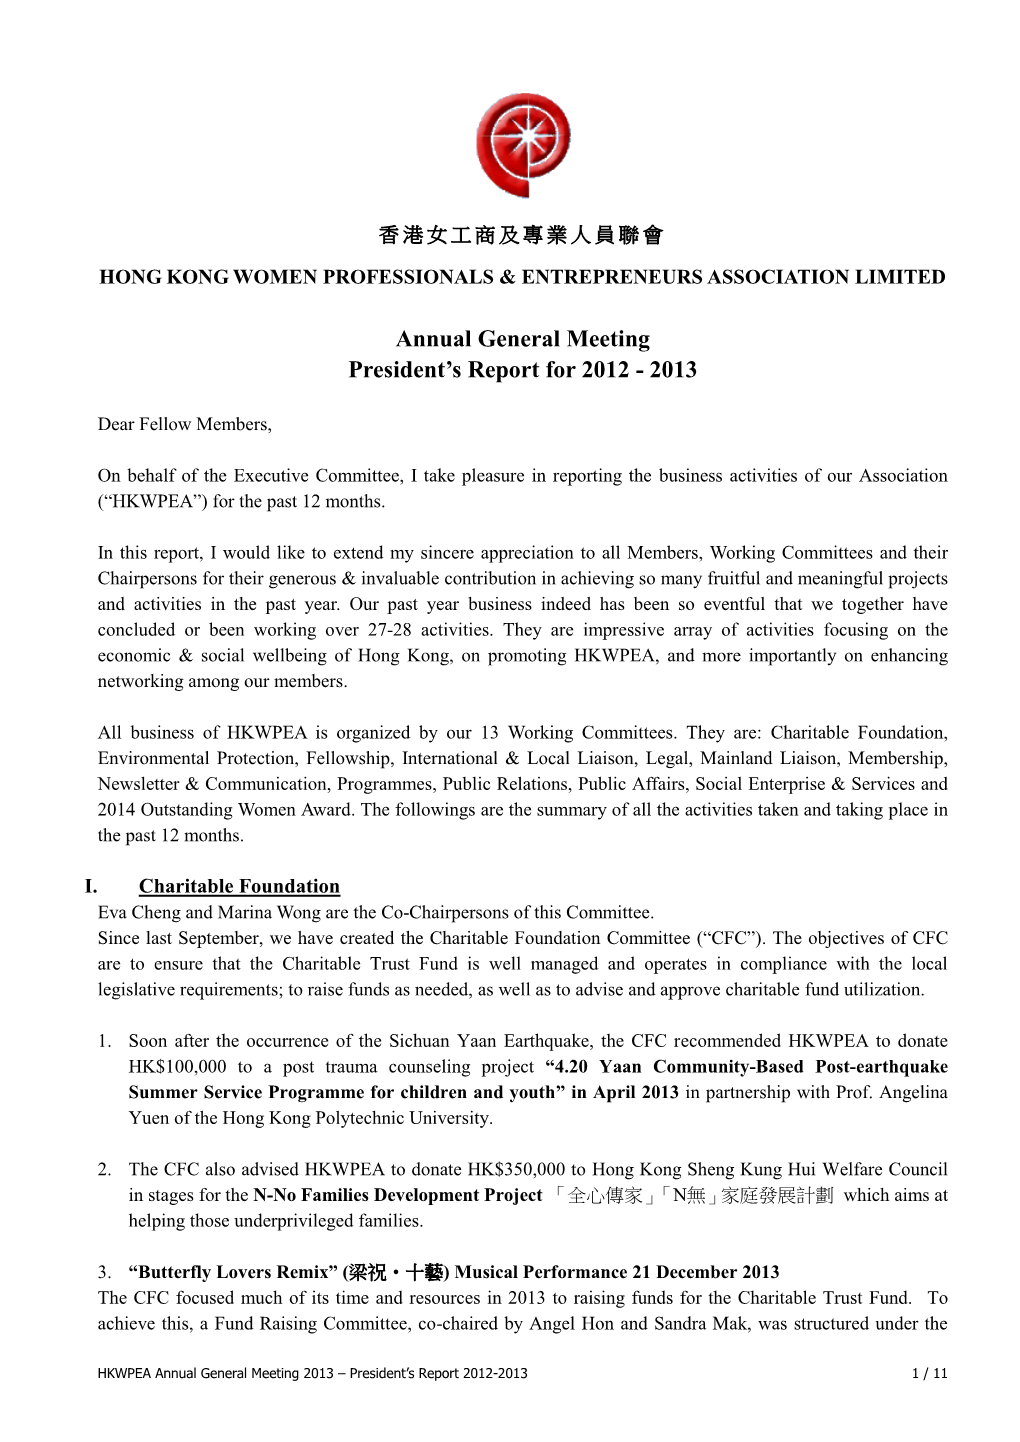 President's Report for 2012-2013